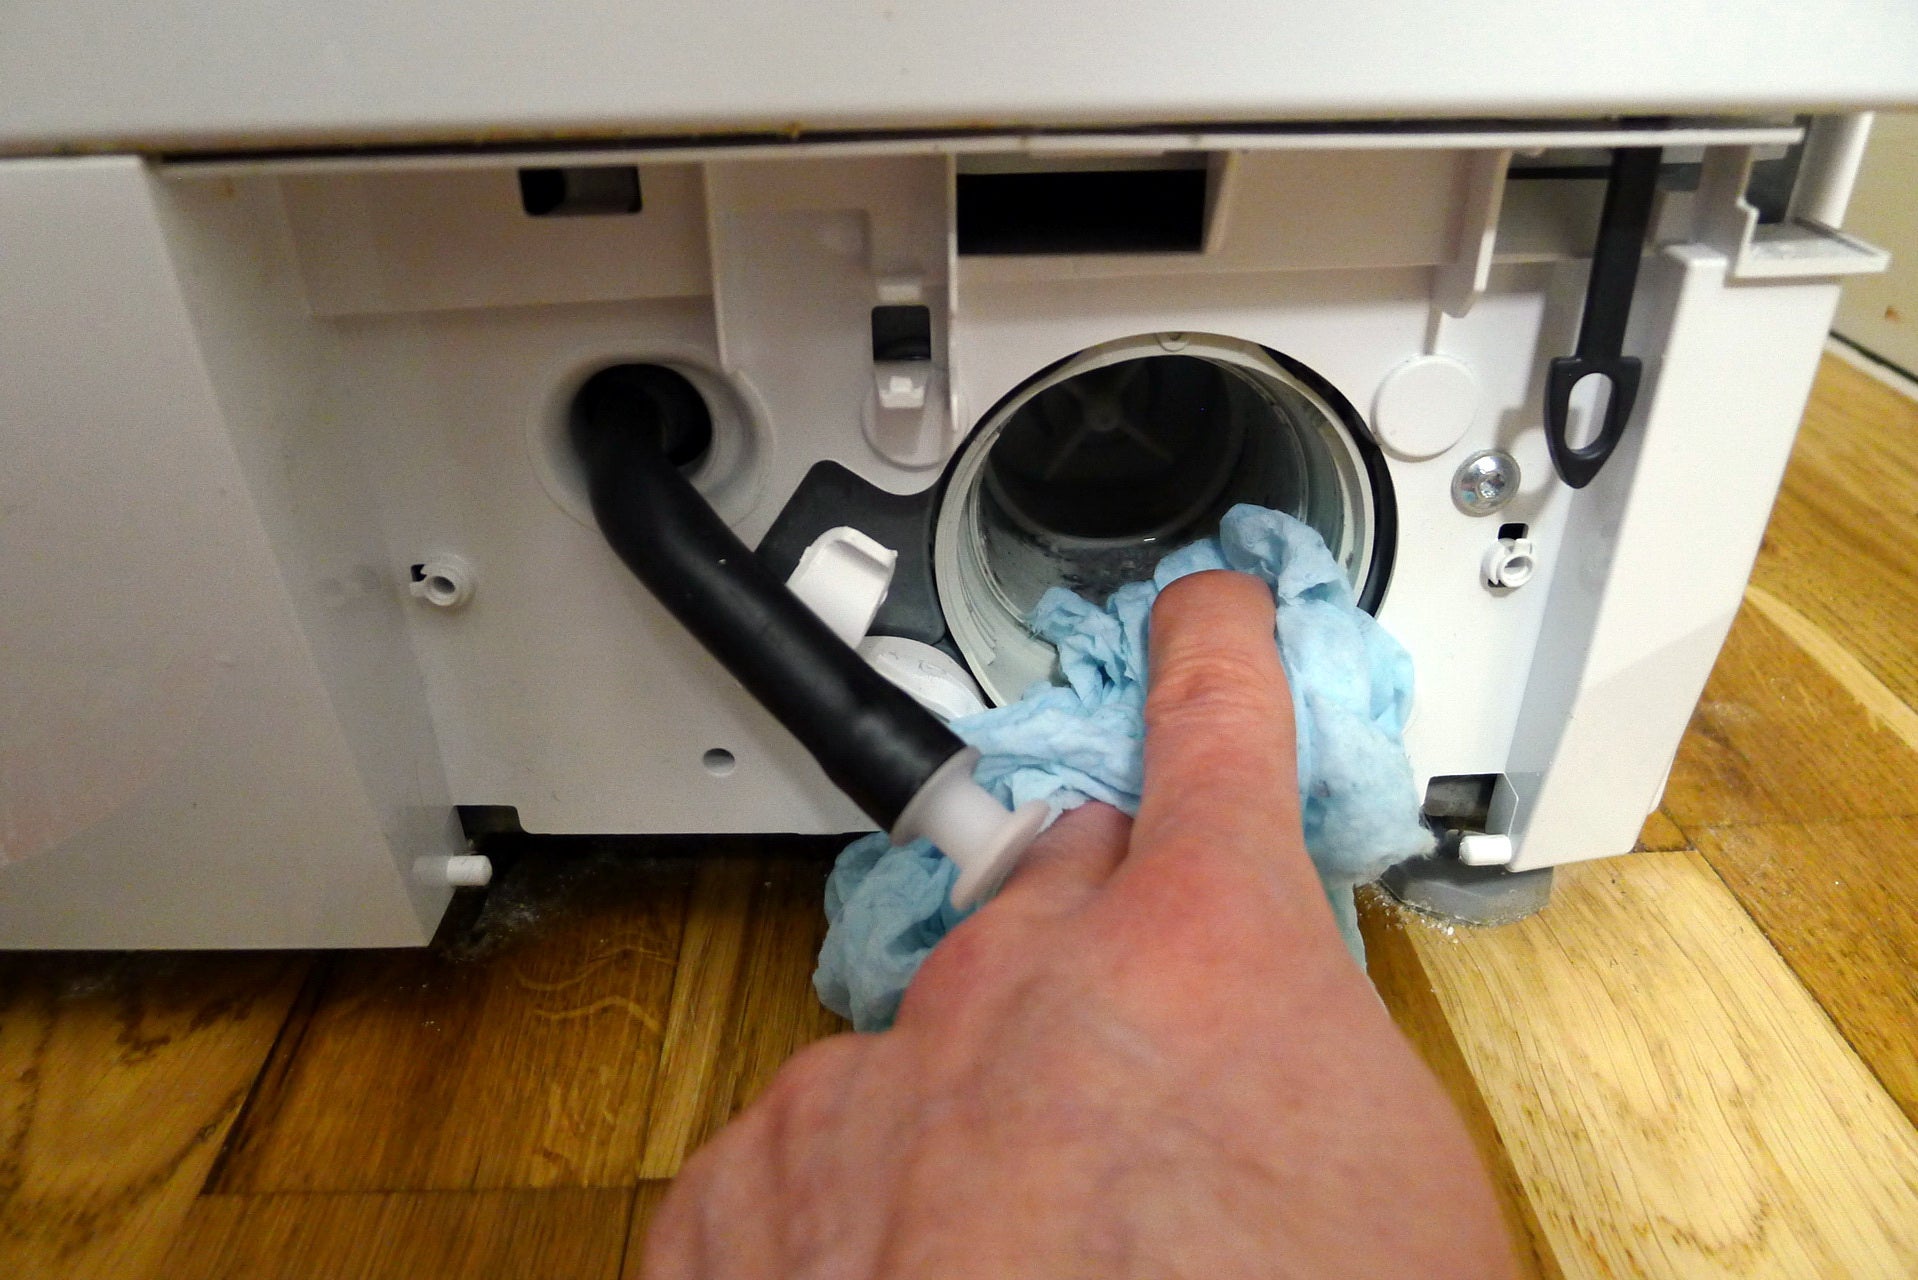 Wipe clean the washing machine pump cover screw thread